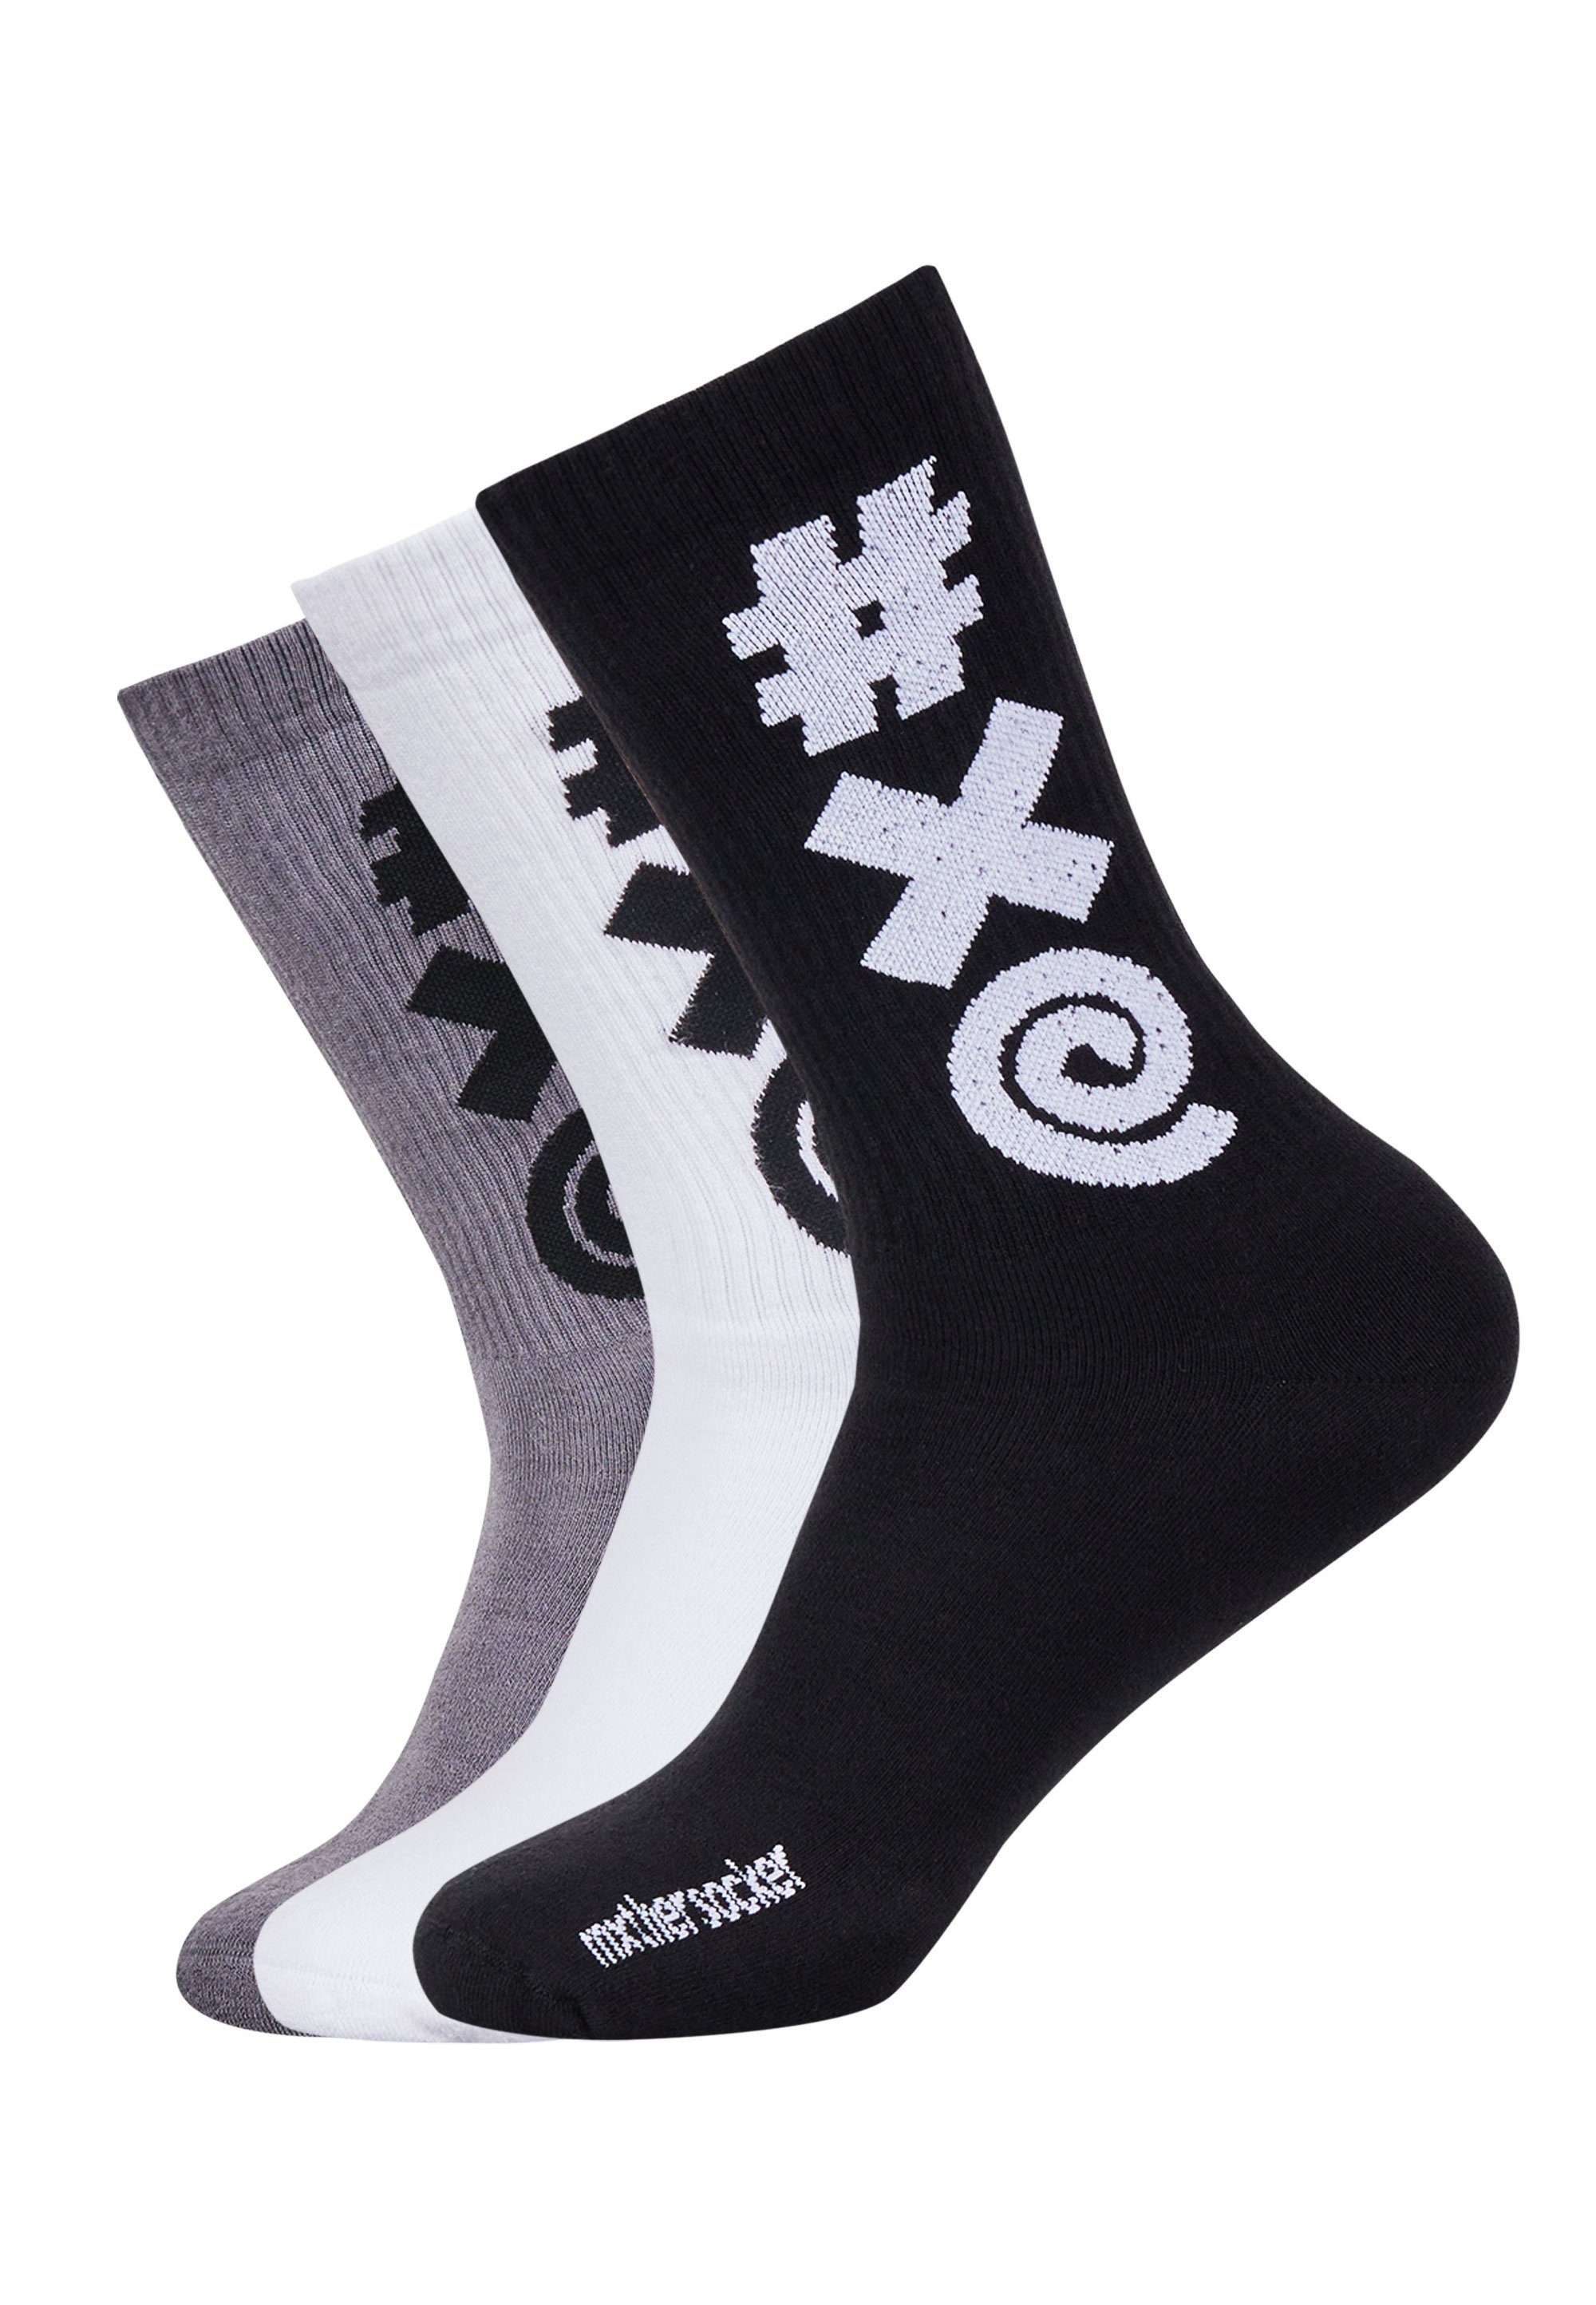 Mxthersocker Socken ESSENTIAL - THREE BEEPS (3-Paar) mit trendigem Schriftzug dunkelgrau, schwarz